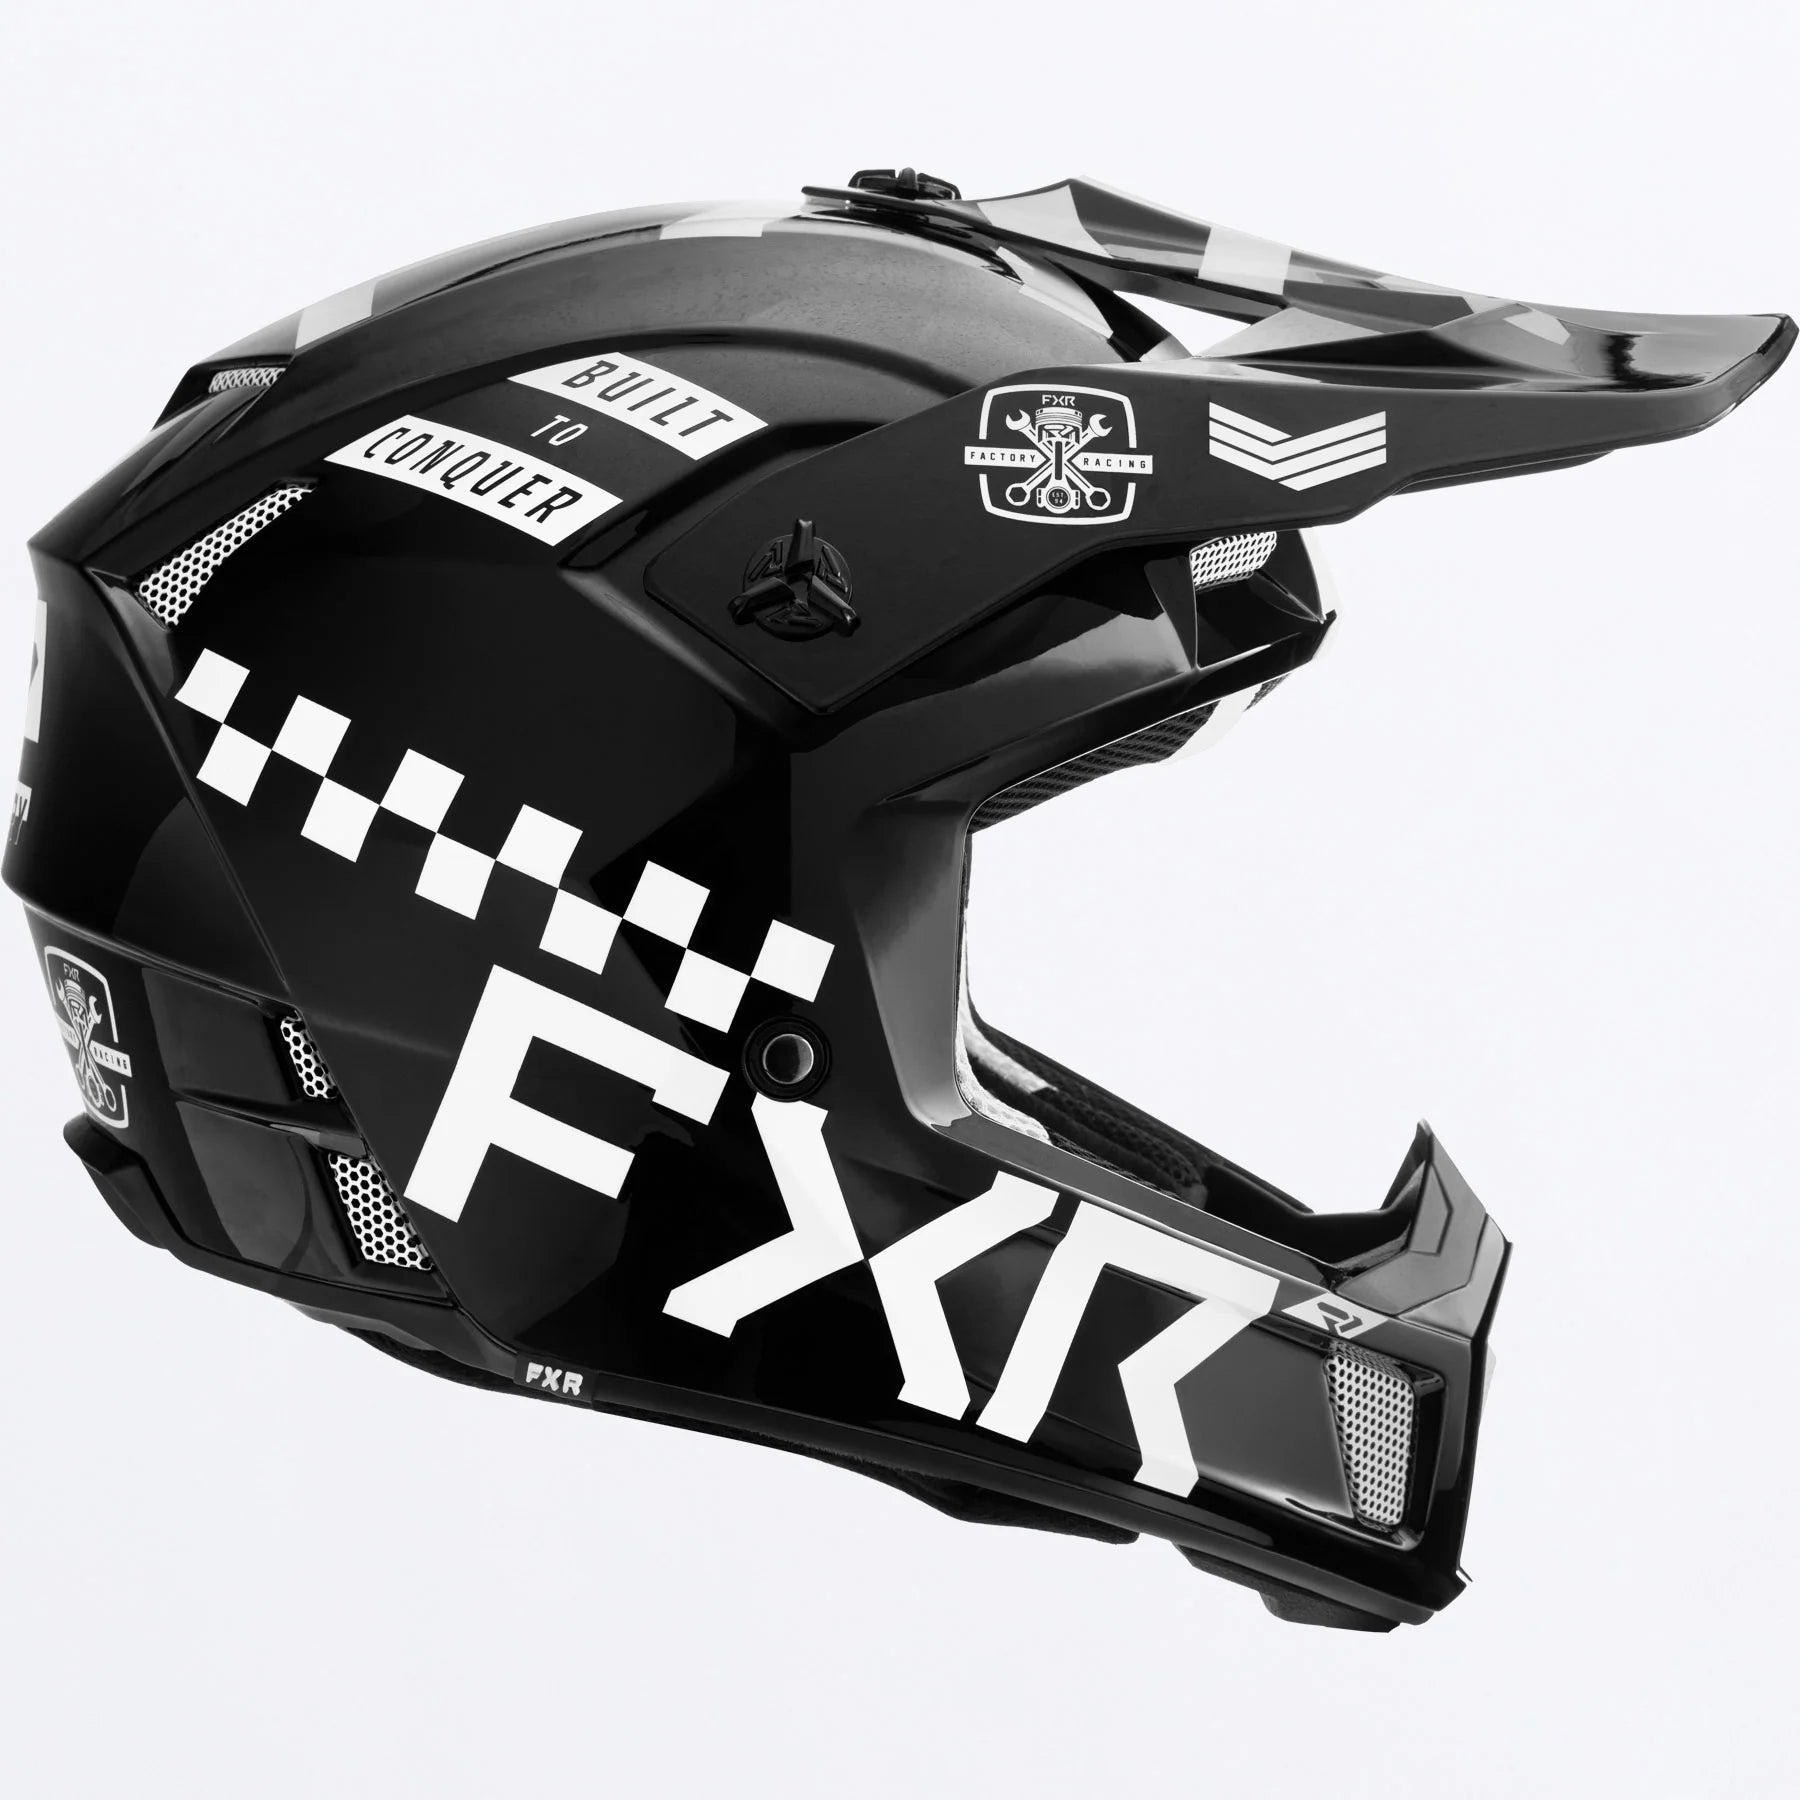 FXR Clutch Gladiator Helmet Black/White